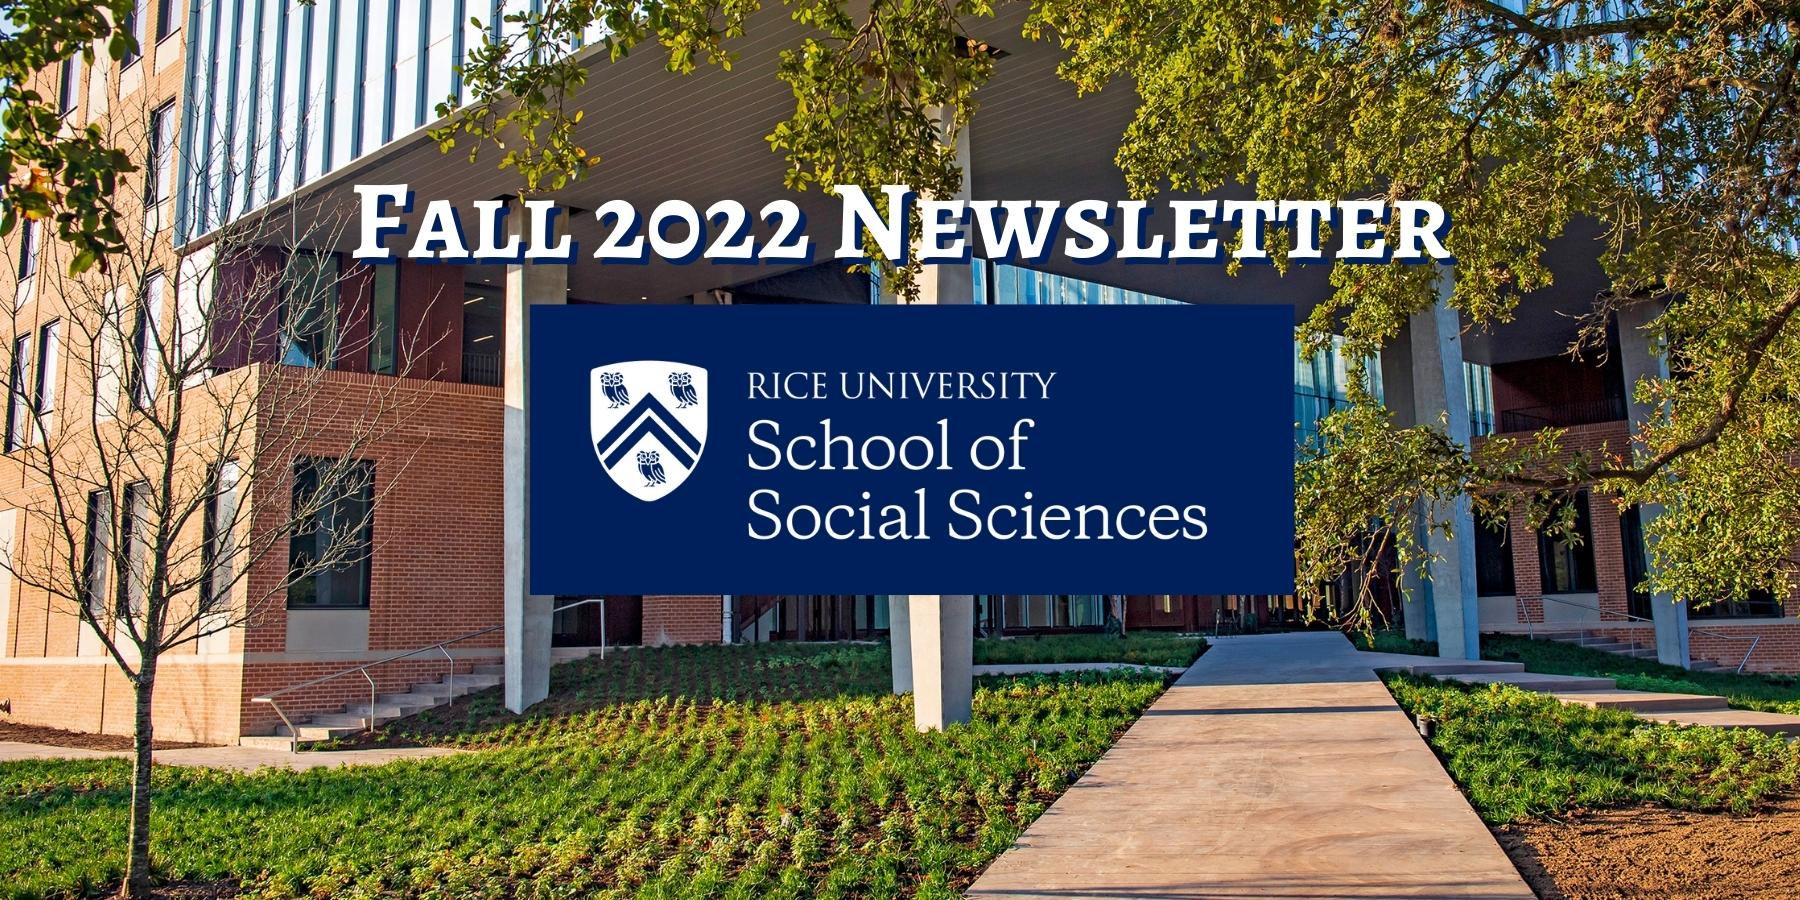 Rice University School of Social Sciences